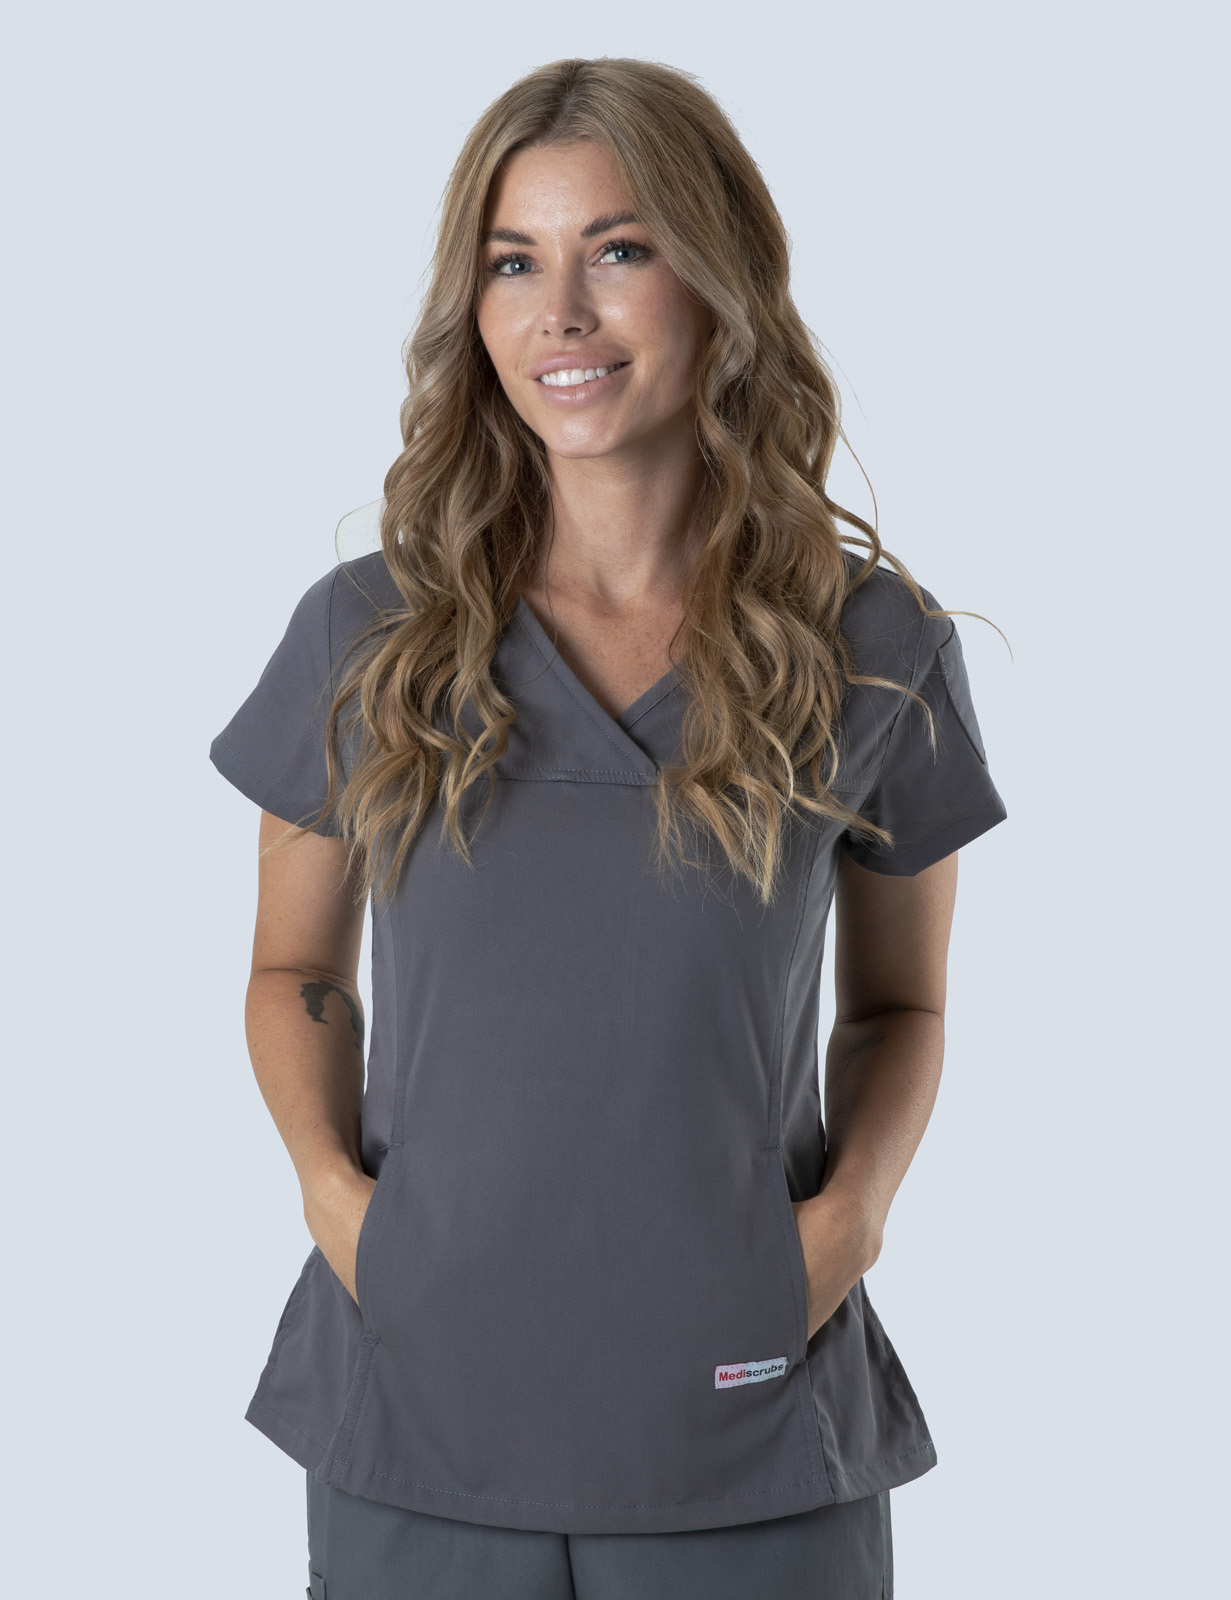 Queensland Children's Hospital Emergency Department Assistant Nurse Unit Manager Uniform Top Bundle  (Women's Fit Top in Steel Grey incl Logos)